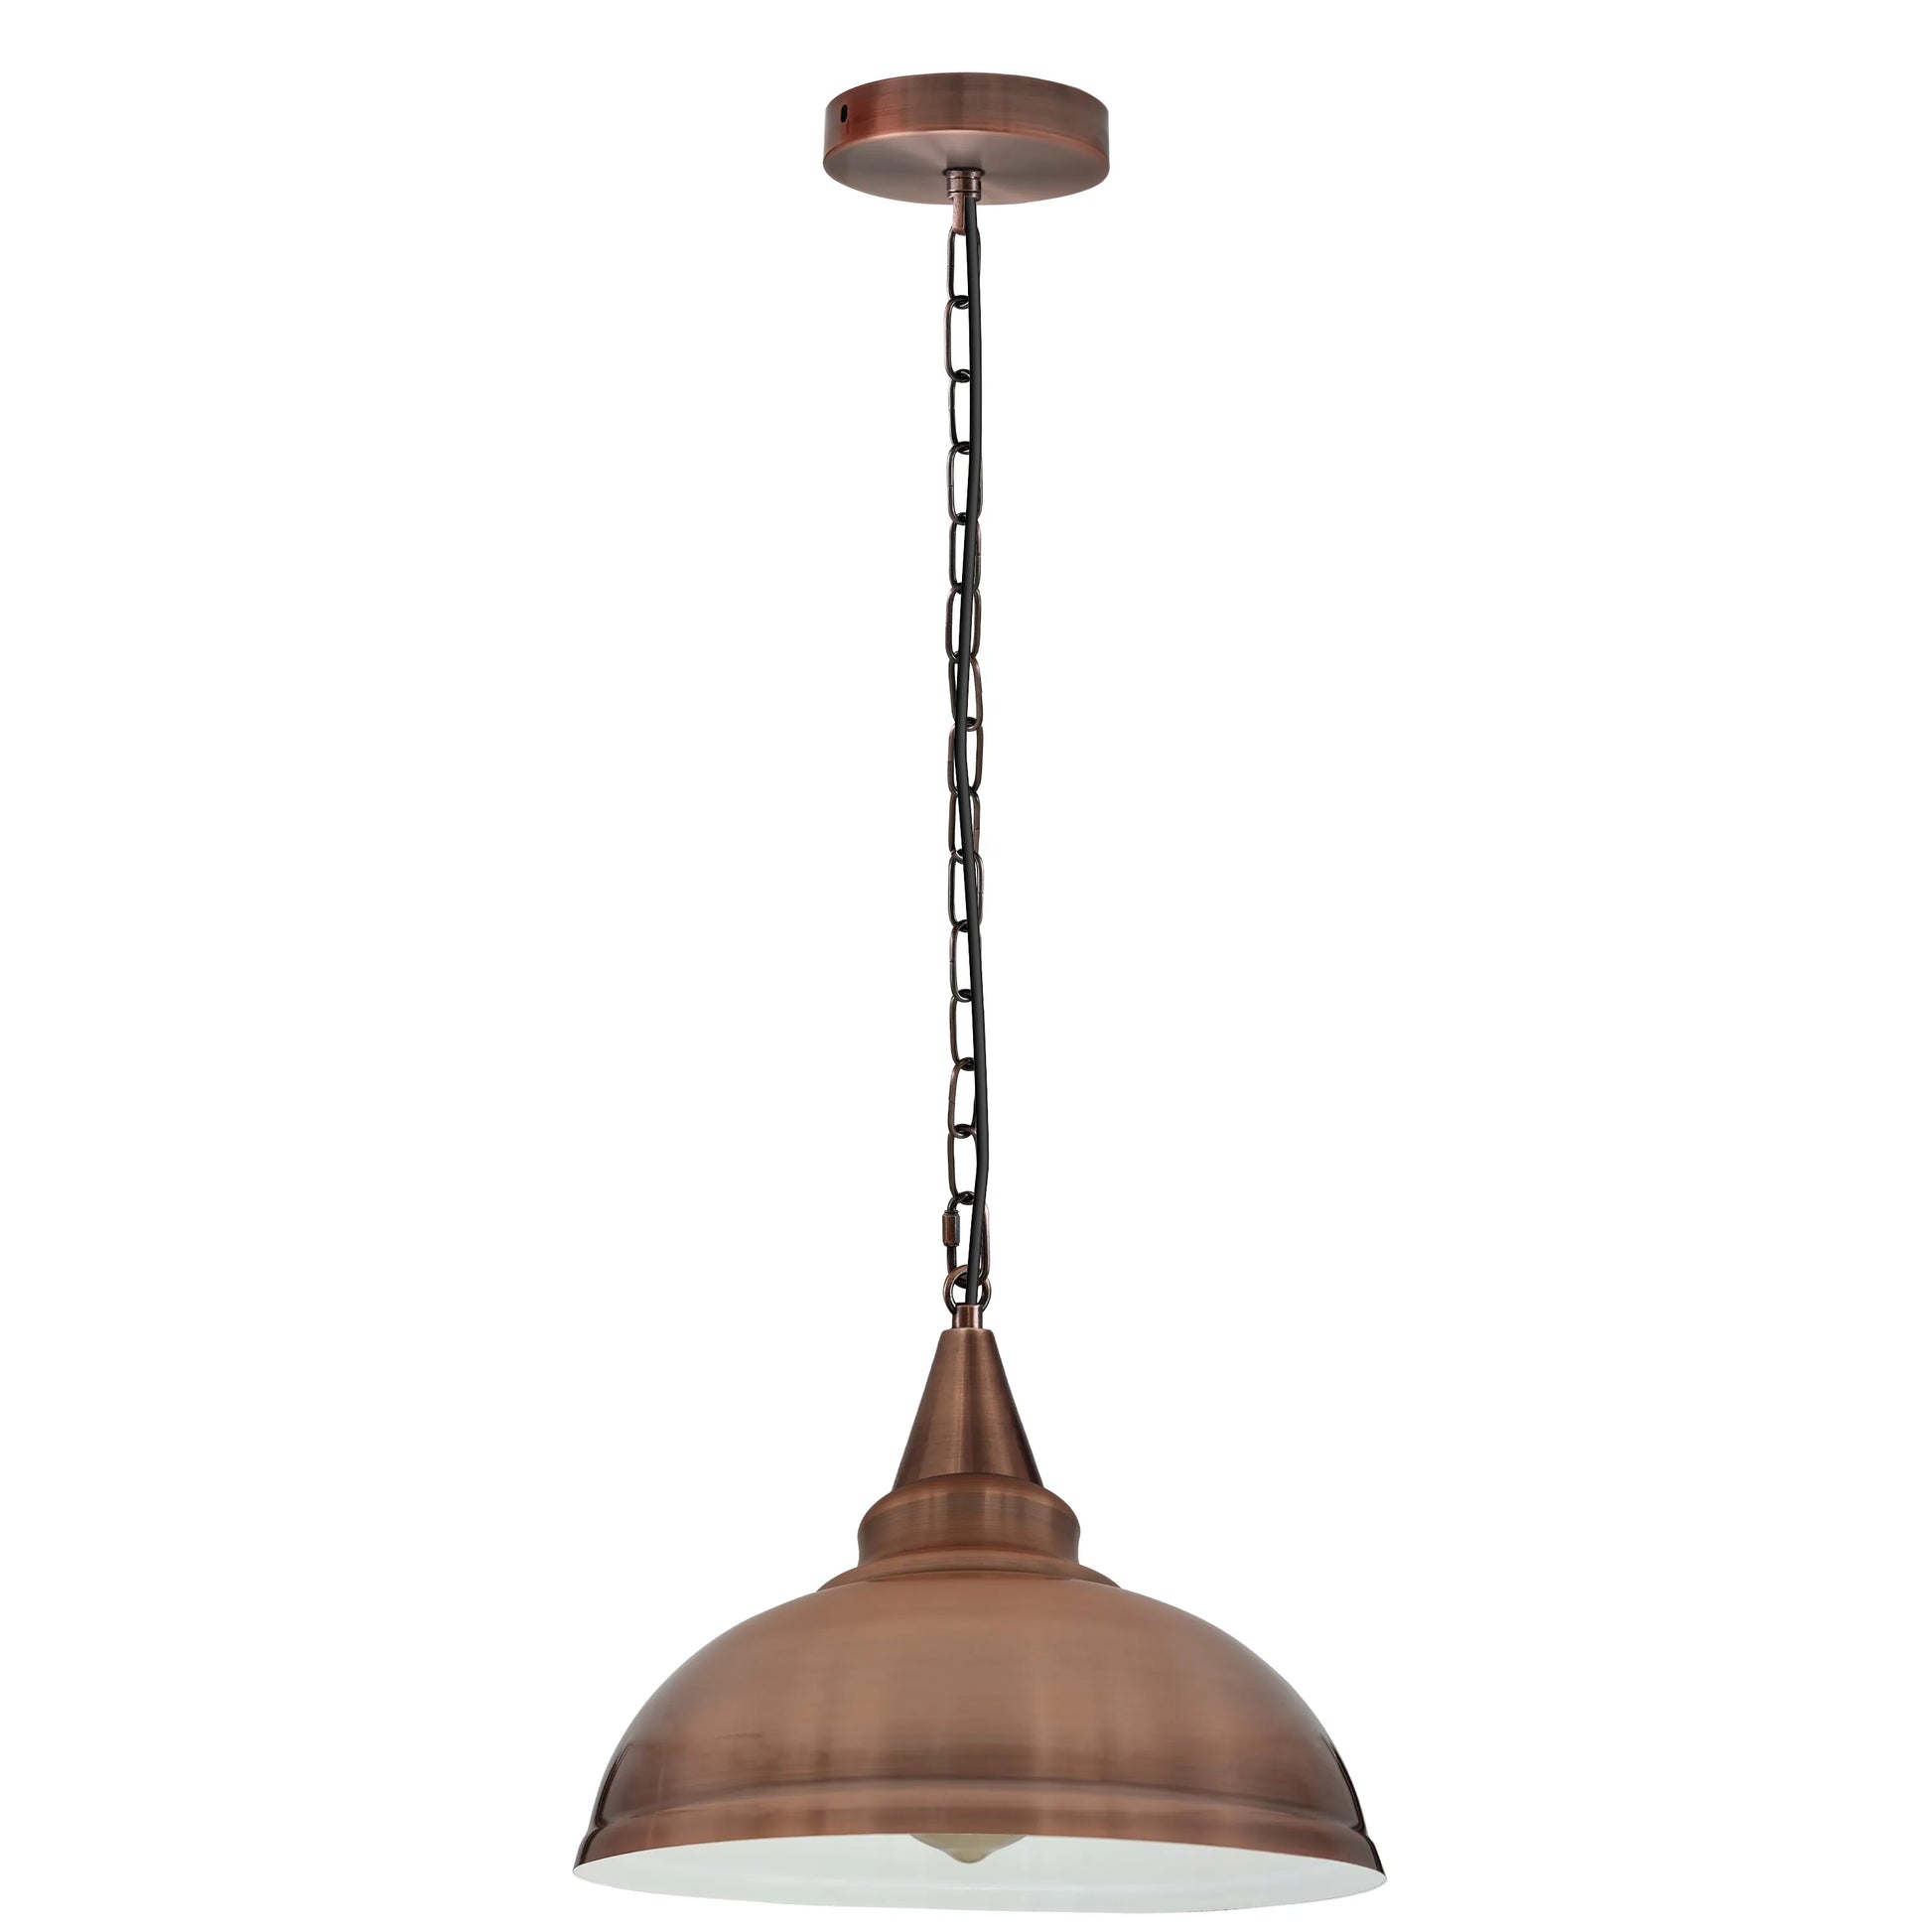 Vintage Industrial Retro Ceiling Metal Pendant Lamp Shade 